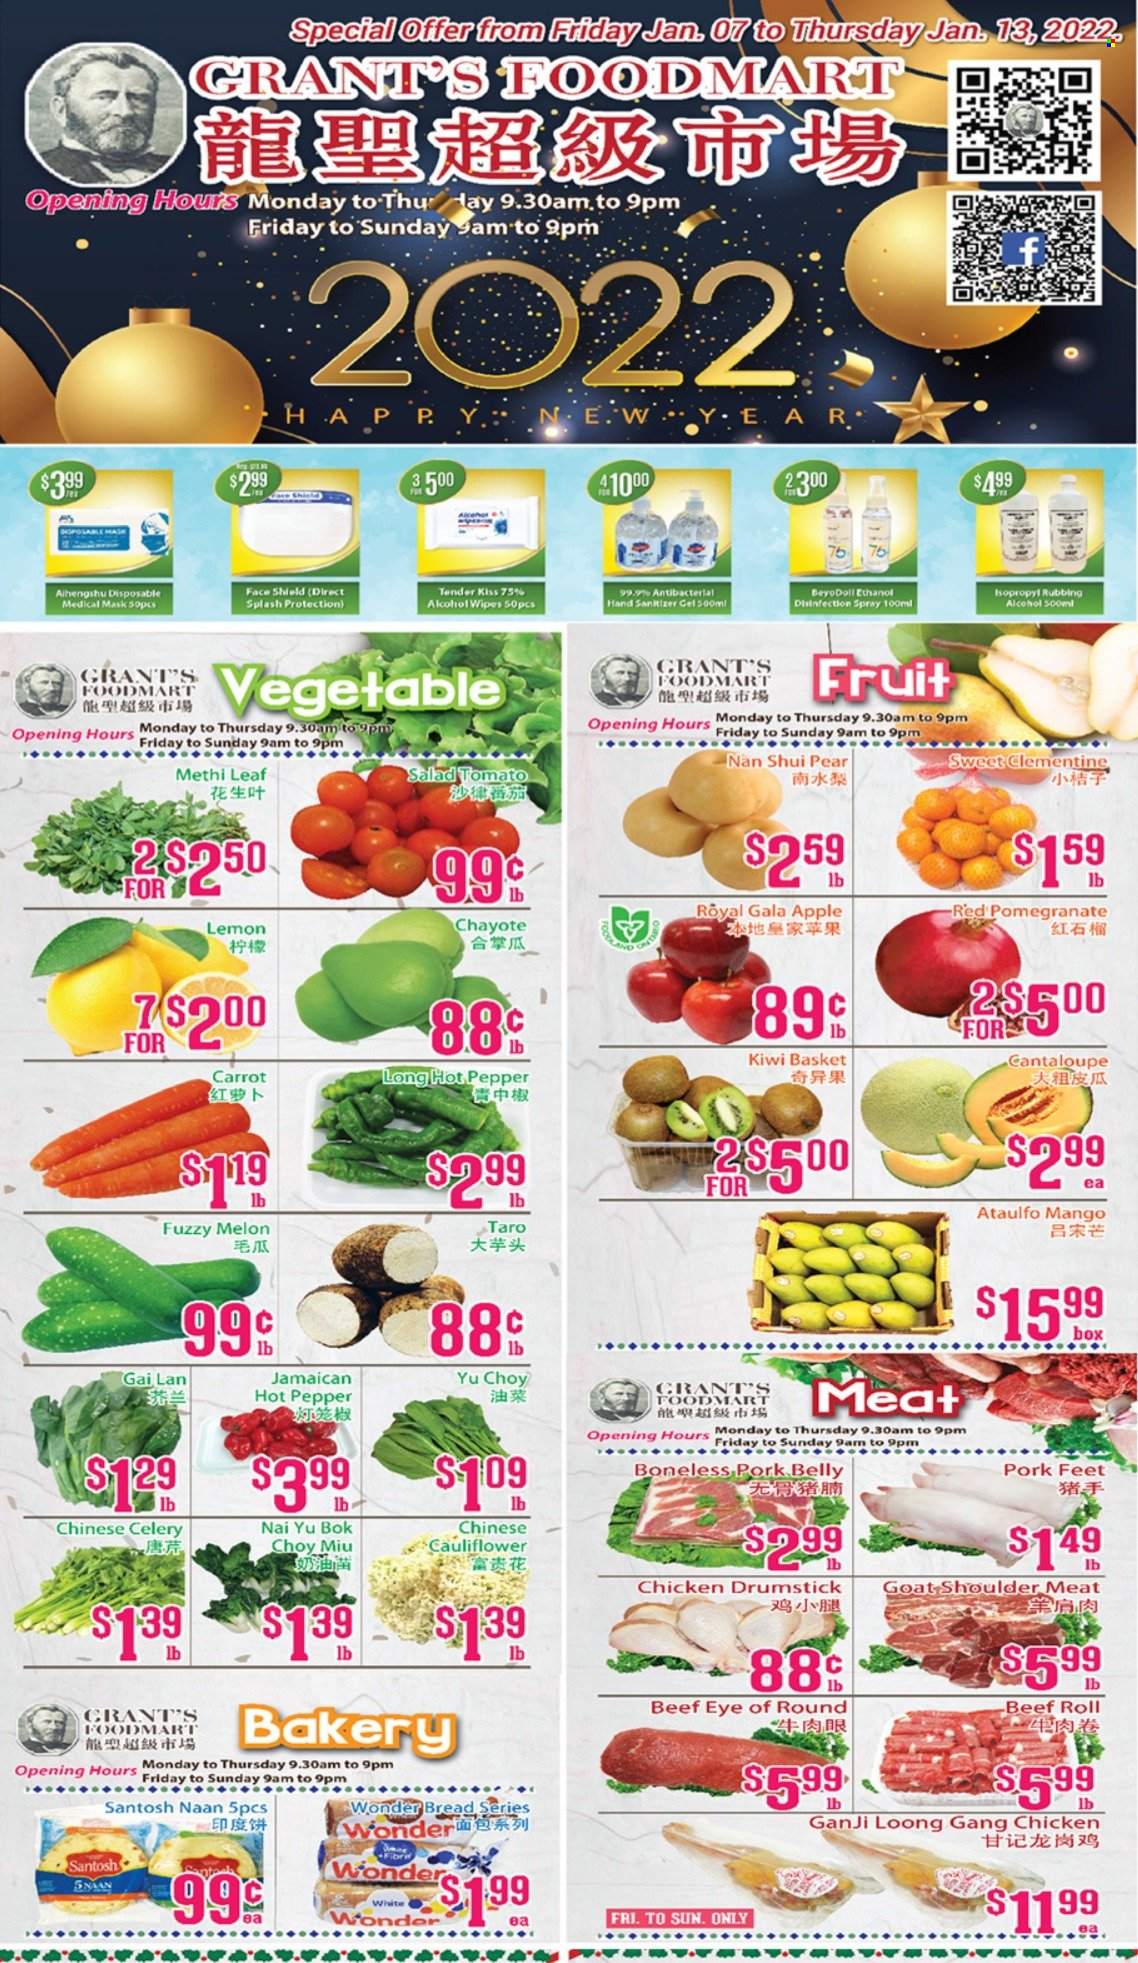 Grant's Foodmart flyer  - January 07, 2022 - January 13, 2022.